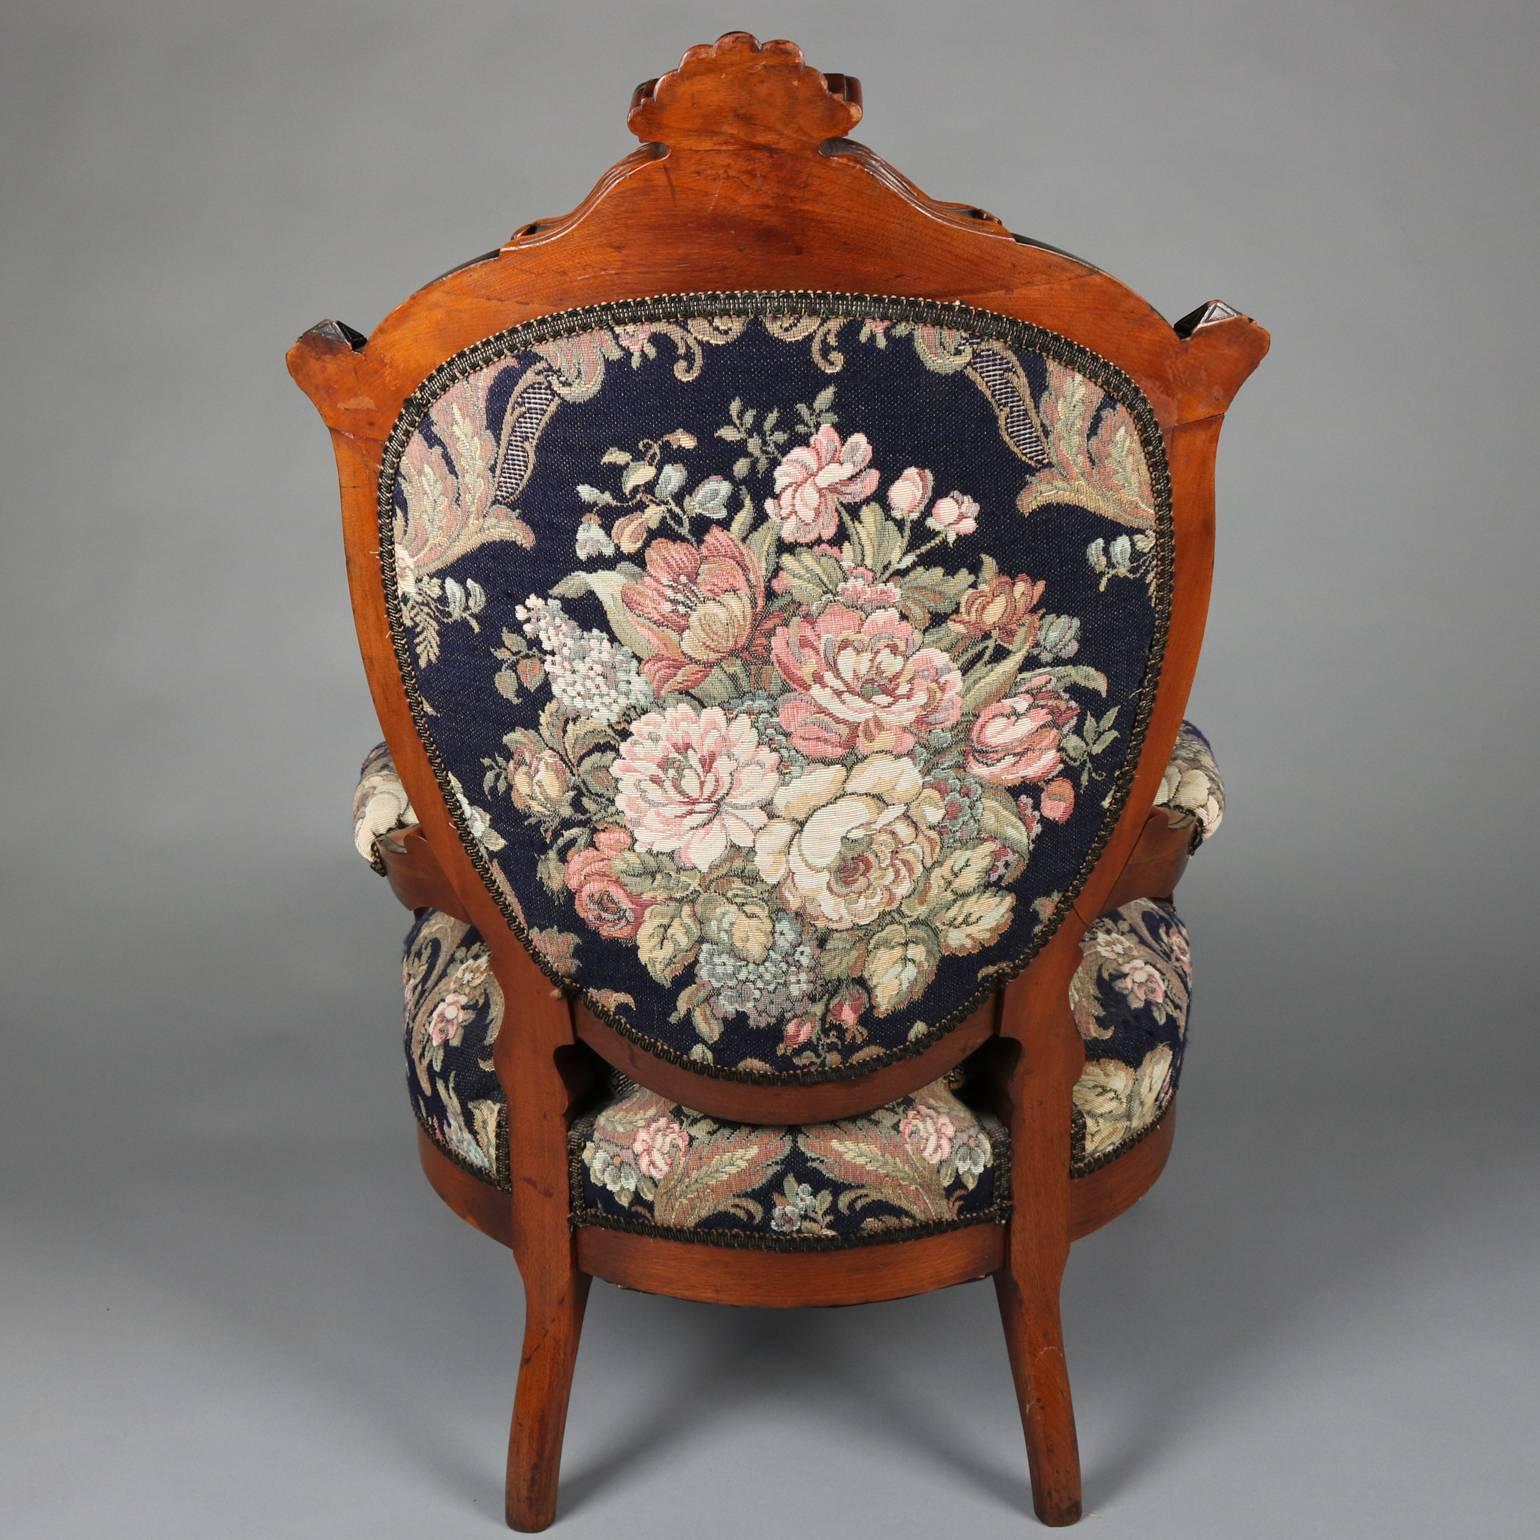 American Renaissance Revival Carved Ebonized Mahogany Parlor Settee & Chair, circa 1860